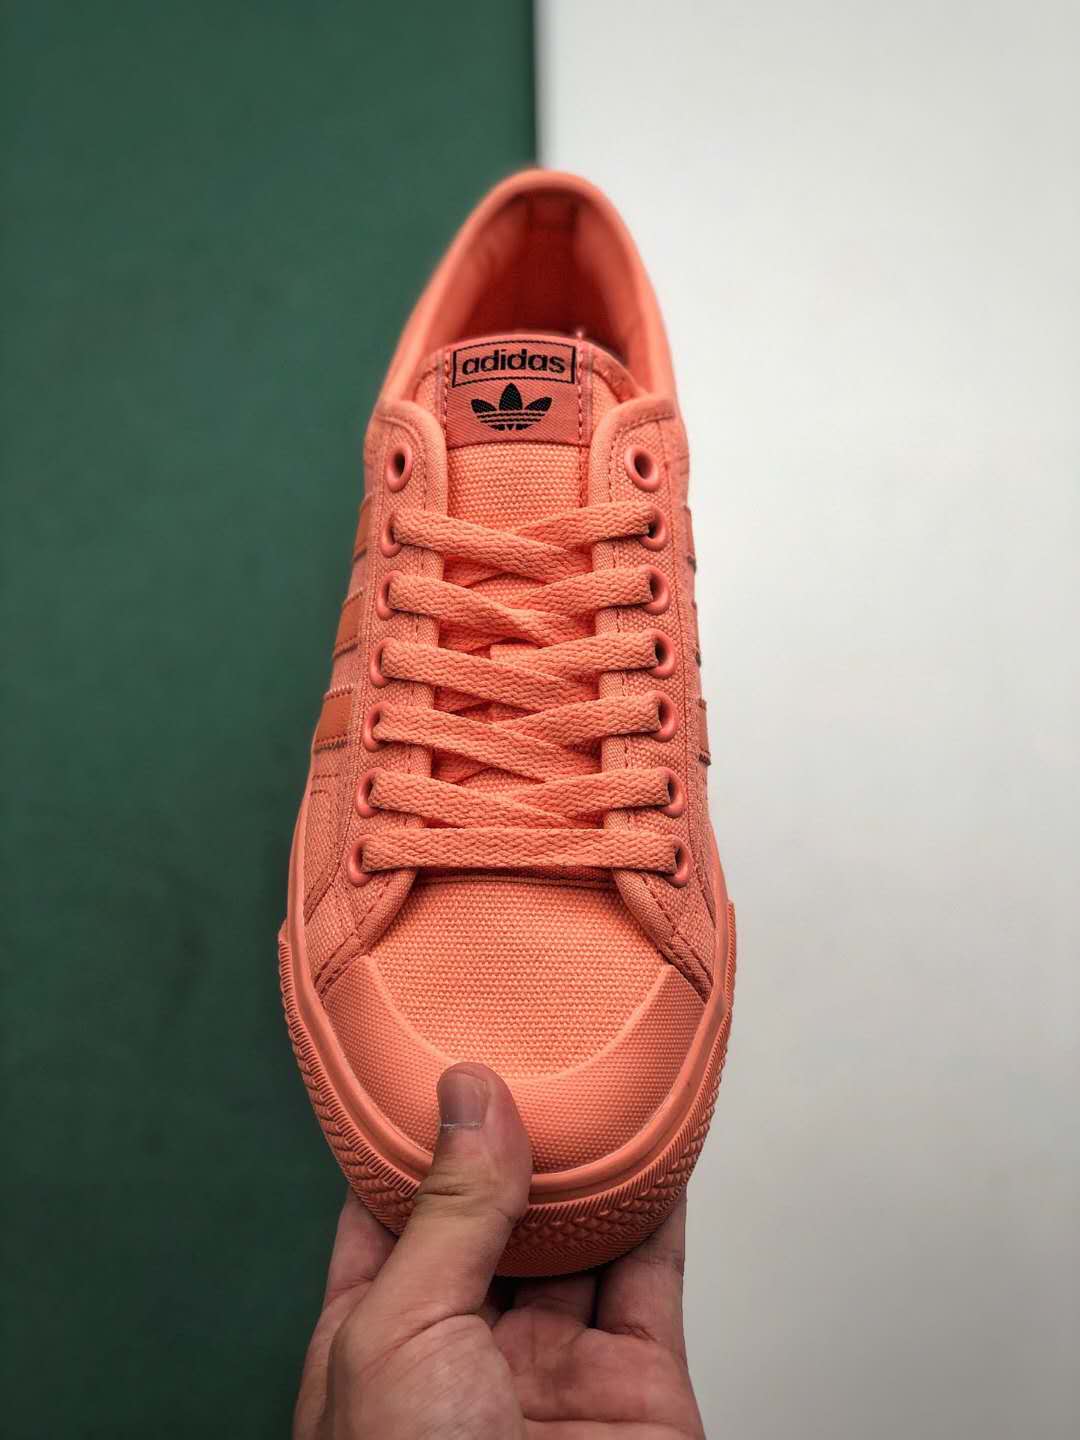 Adidas Originals 3MC Vulc 'Chalk Coral' DB3108 - Stylish Skate Shoes